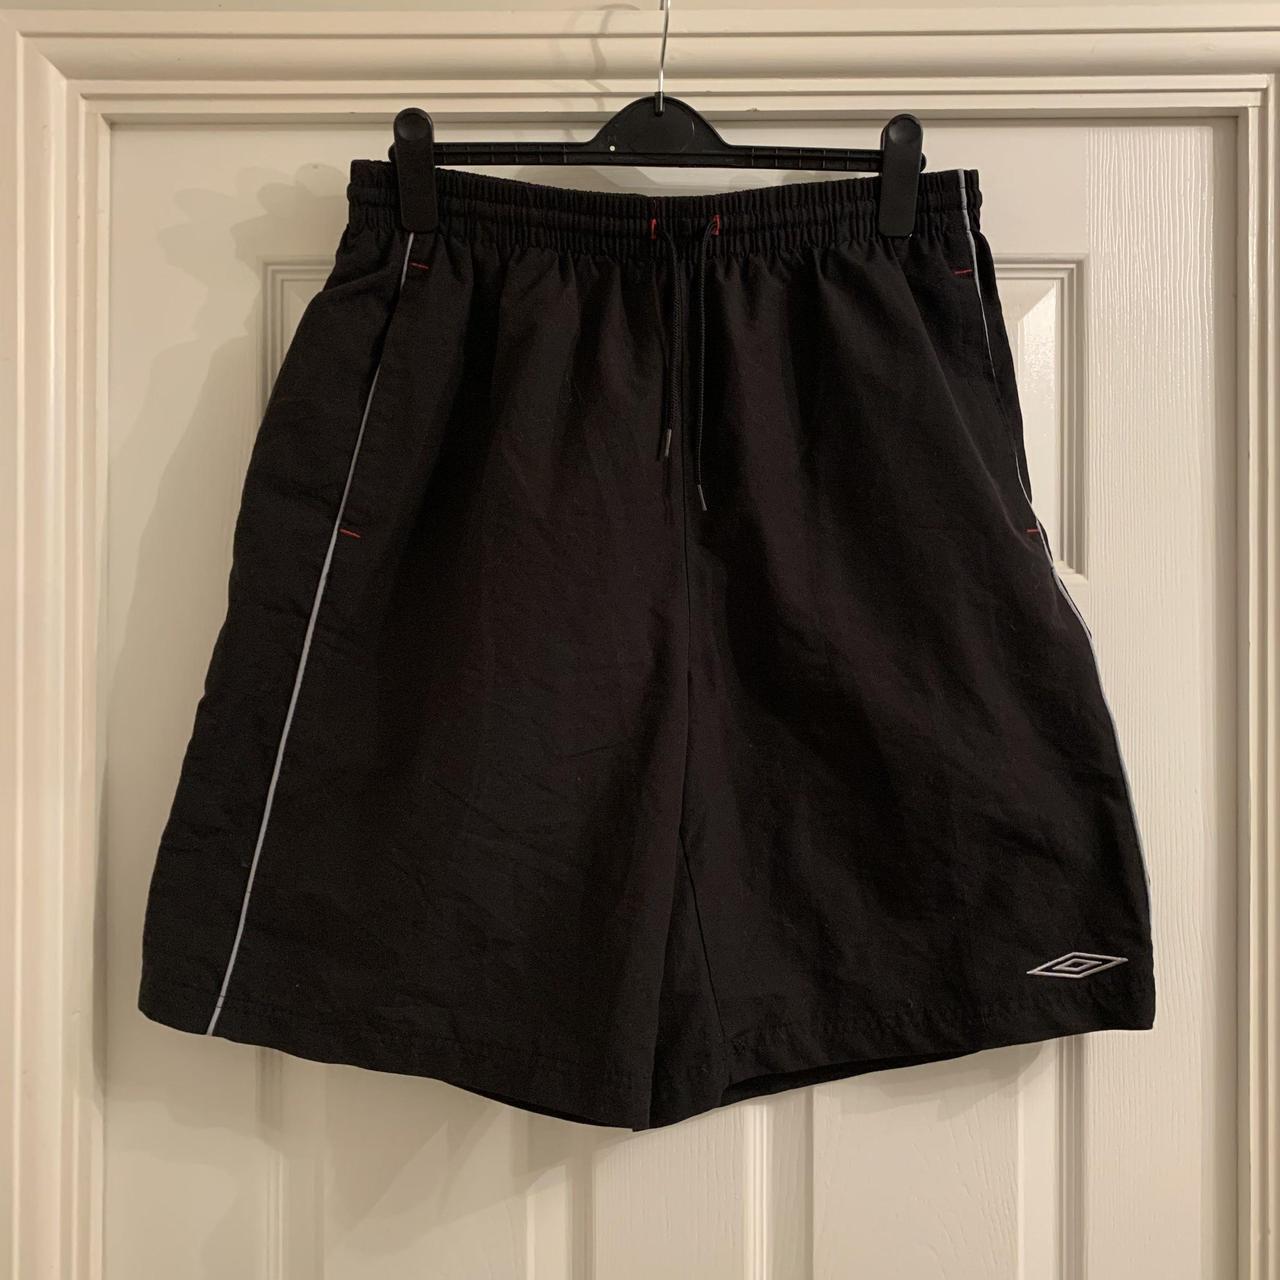 Umbro Men's Black Shorts | Depop